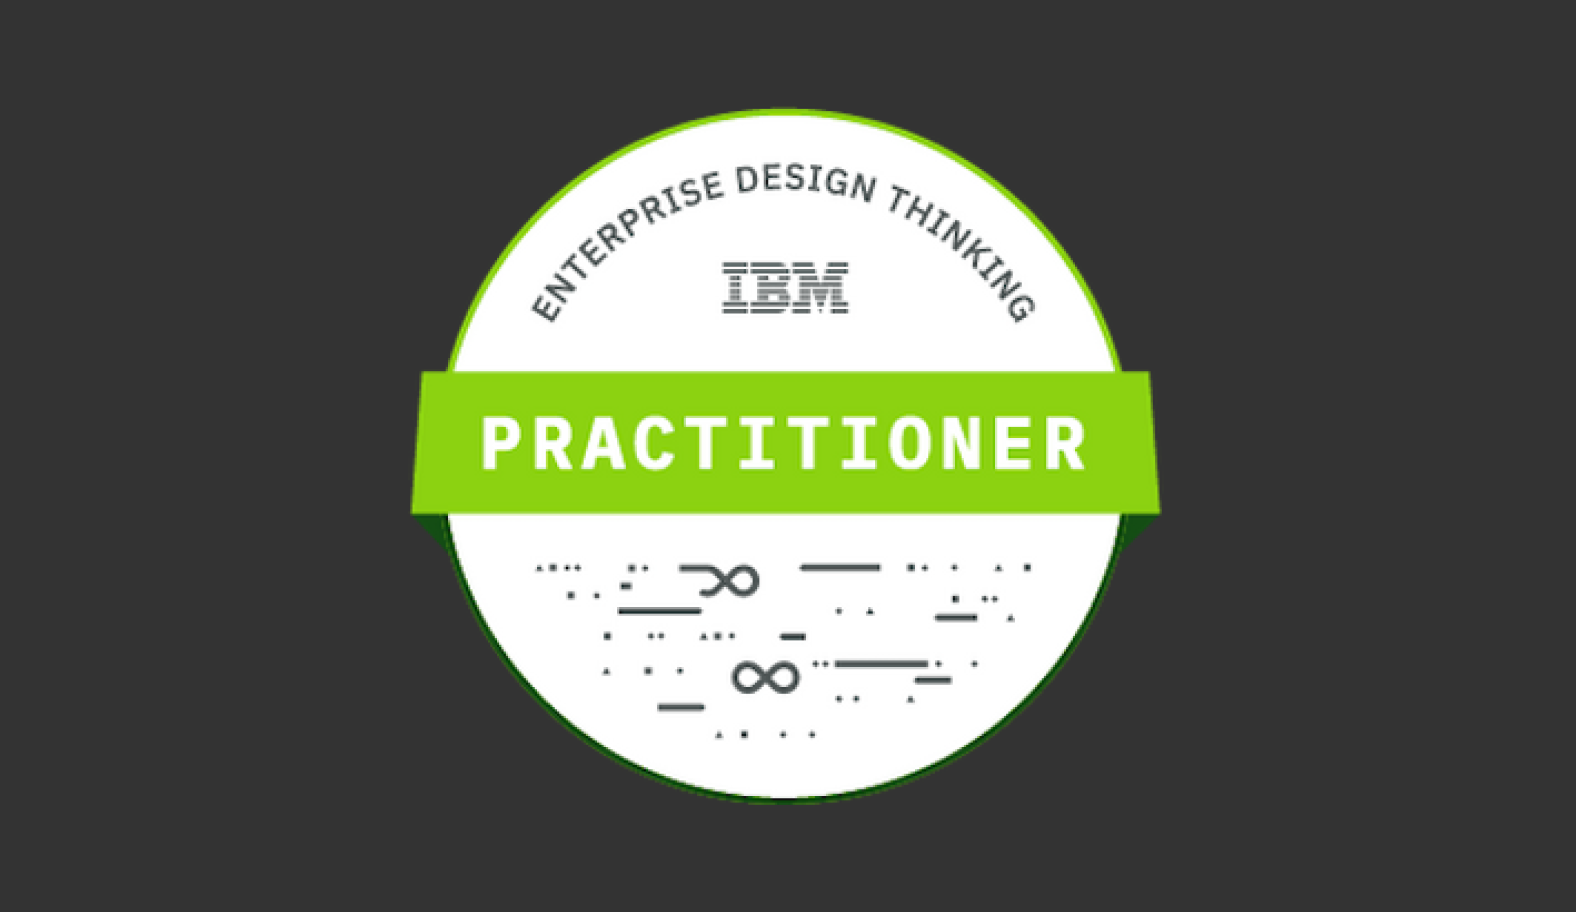 IBM Design Thinking "Practitioner" Badge